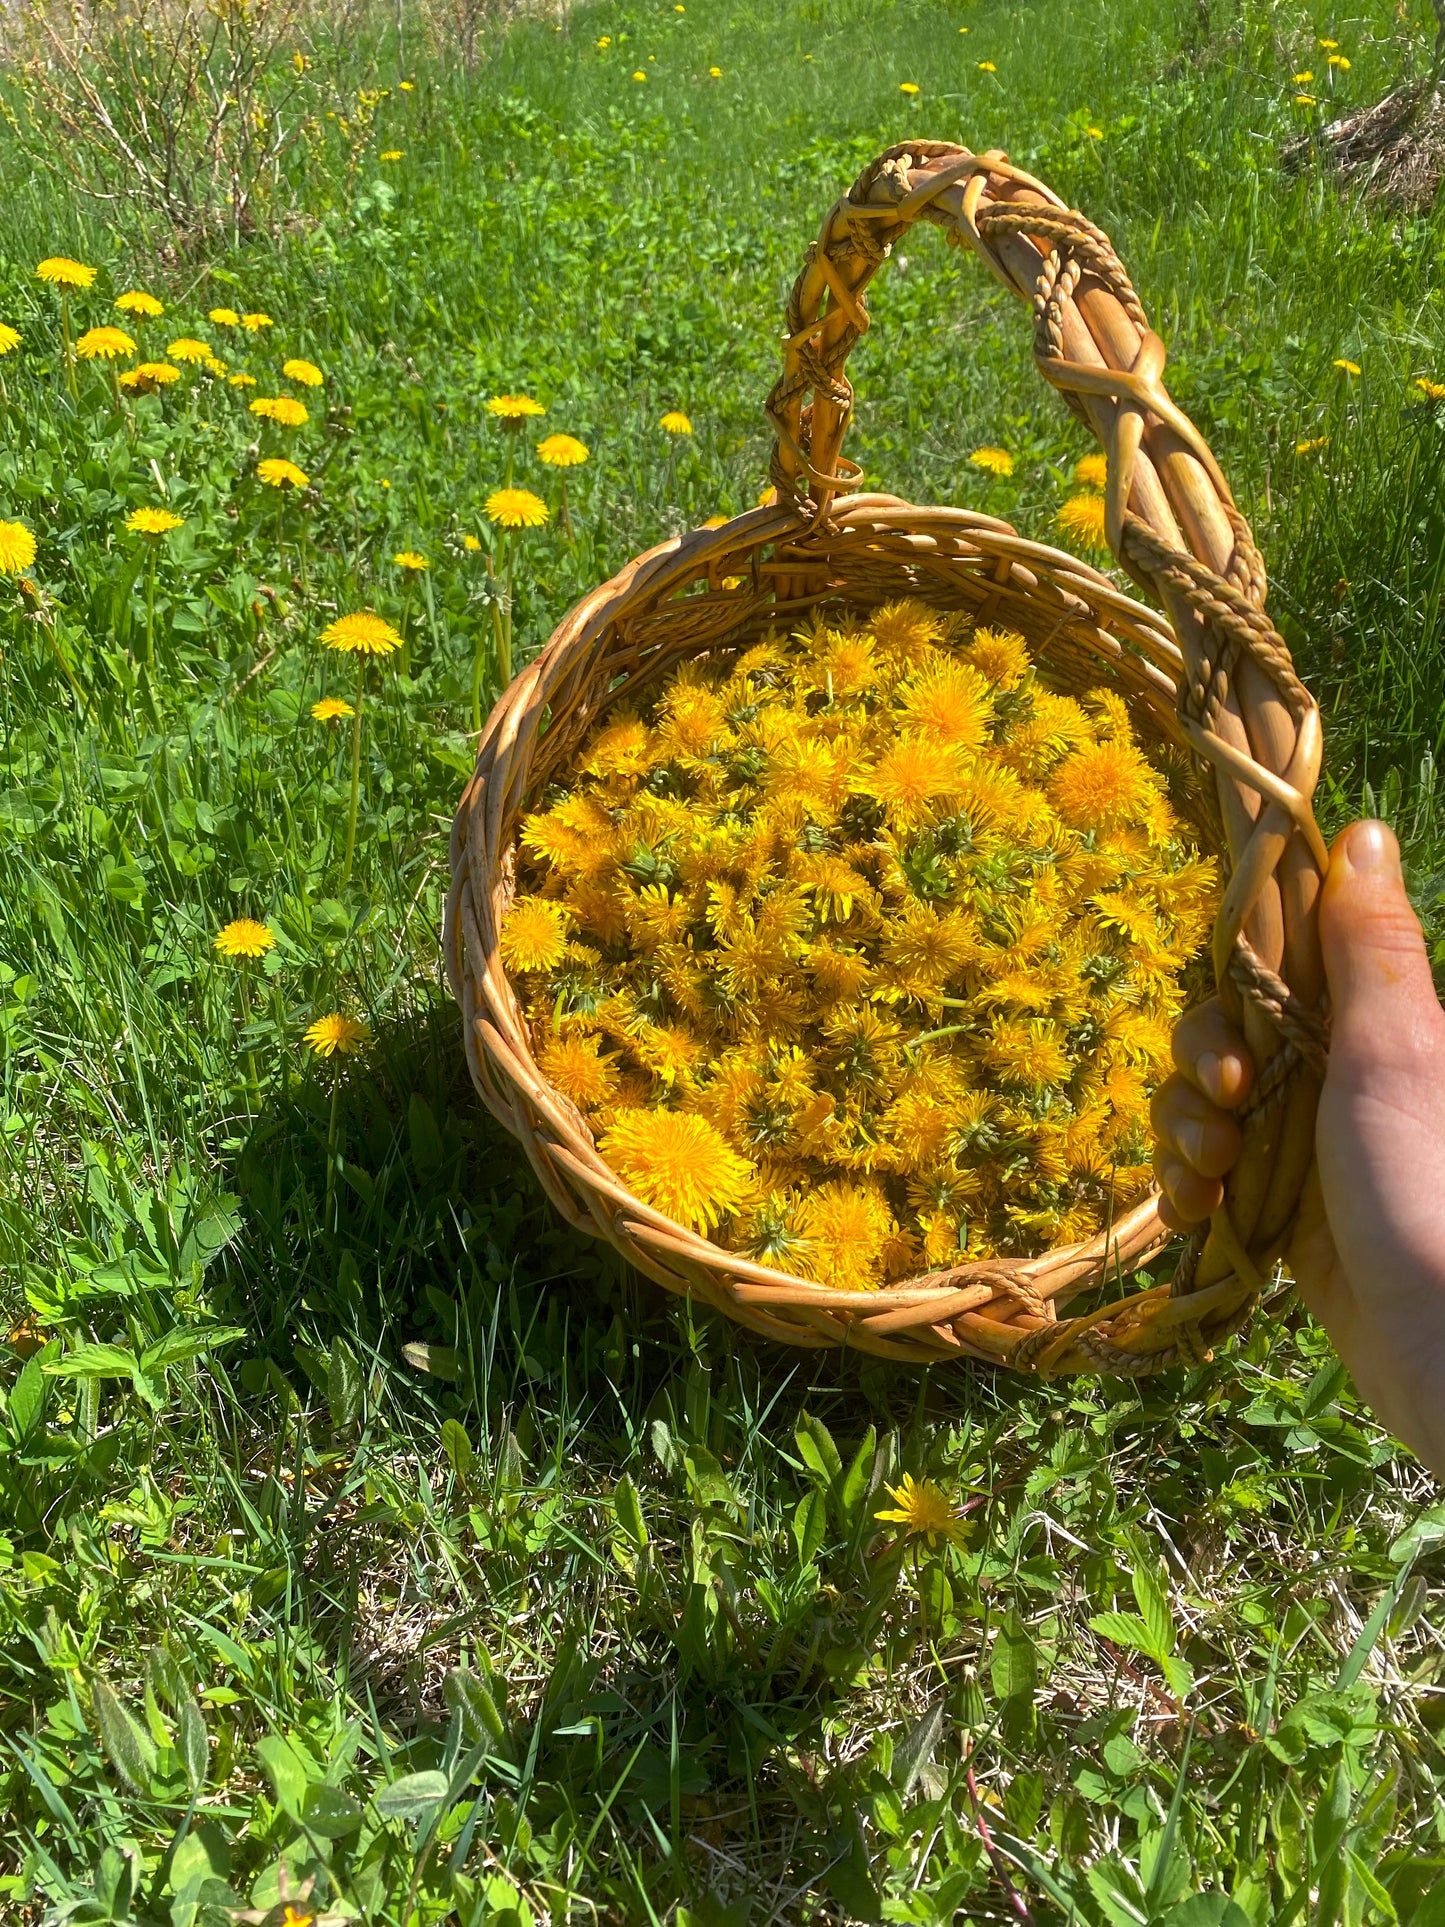 Dandelion flowers 100% natural - Product of Quebec 